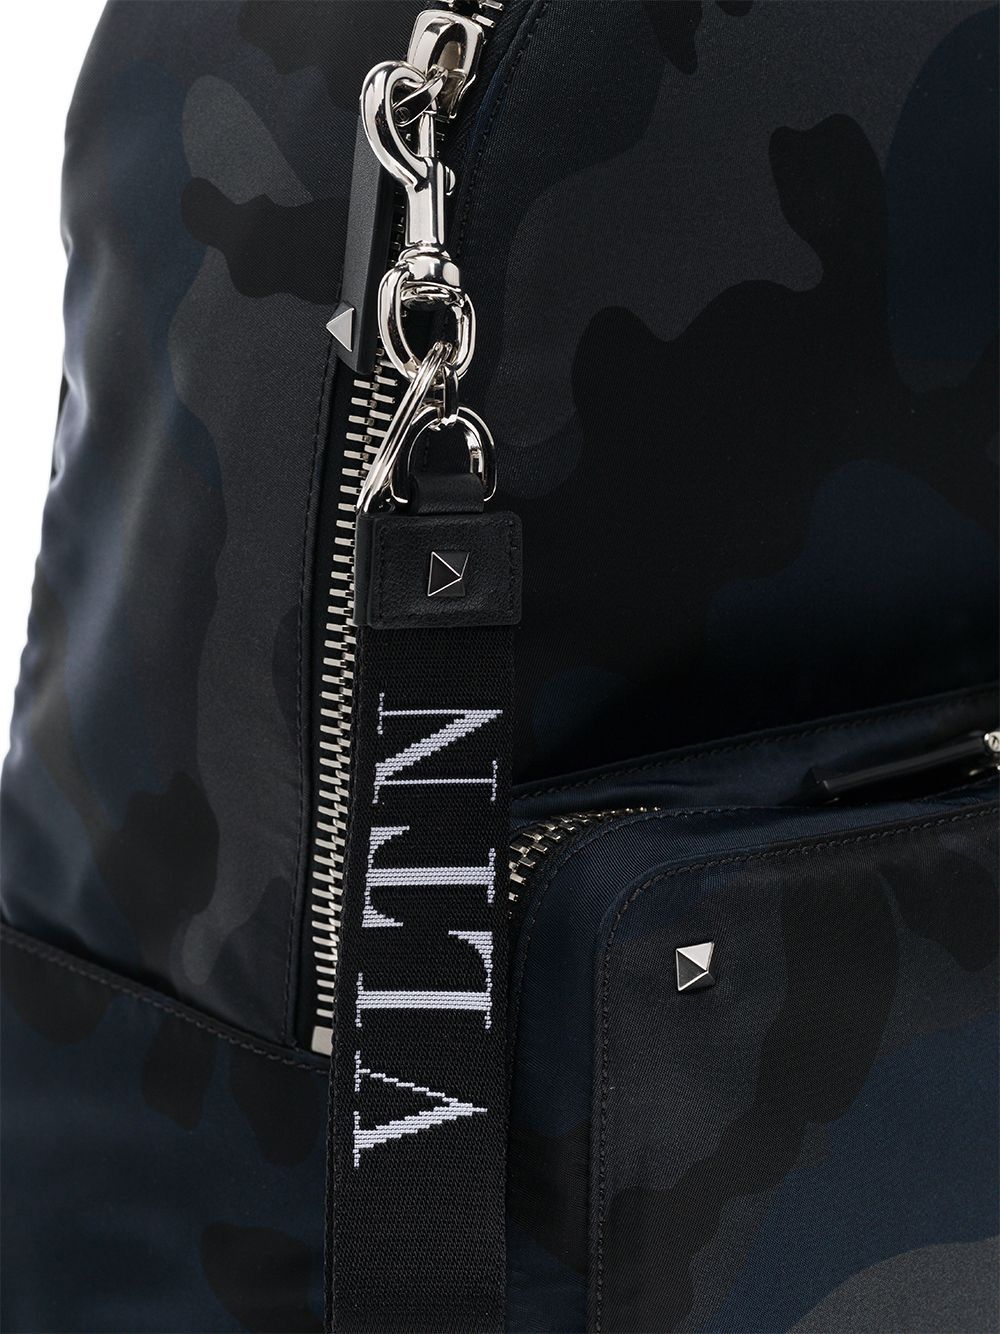 фото Valentino брелок для ключей с логотипом